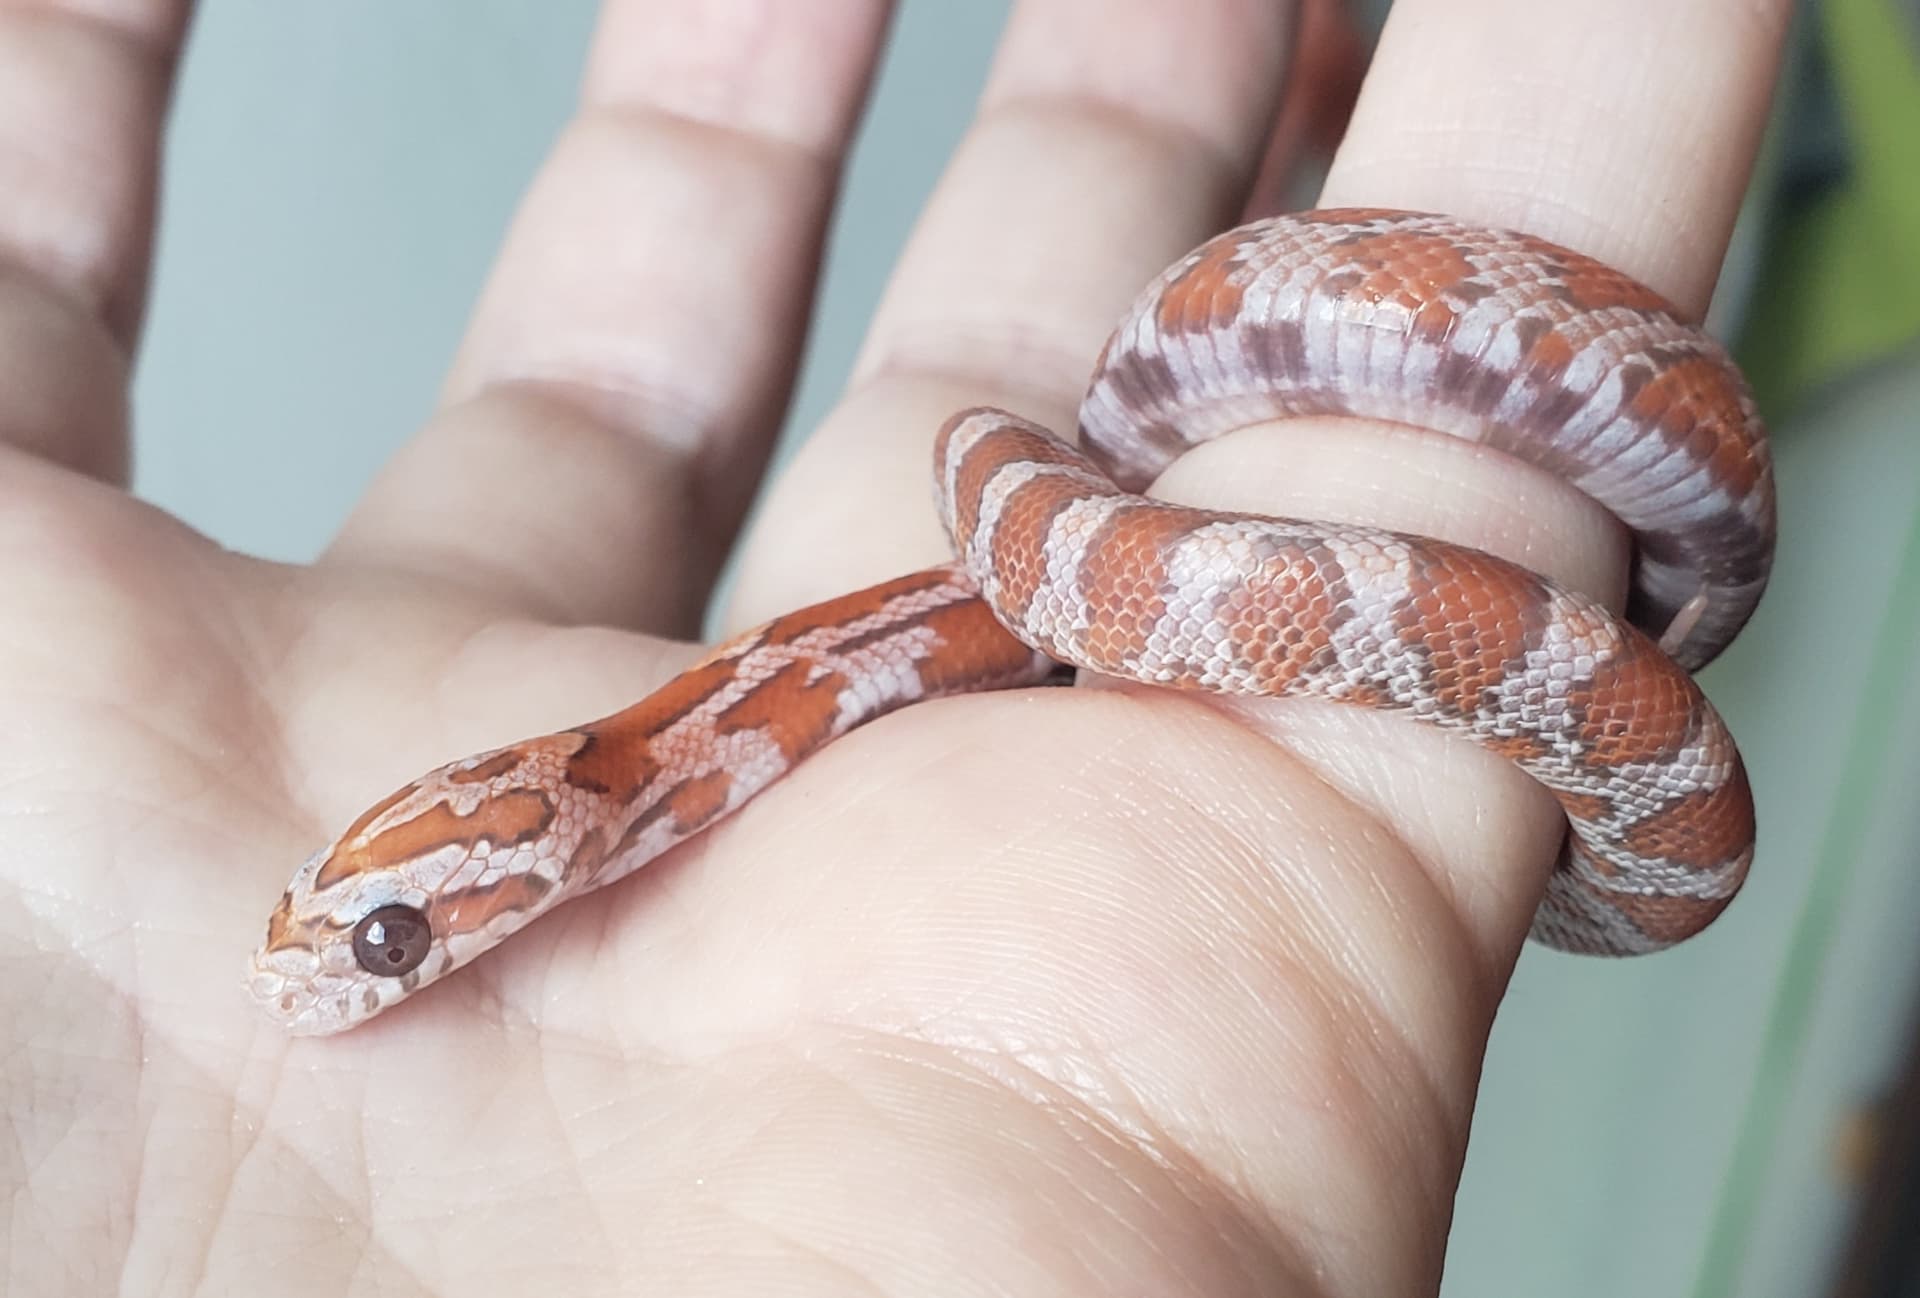 cute baby corn snake